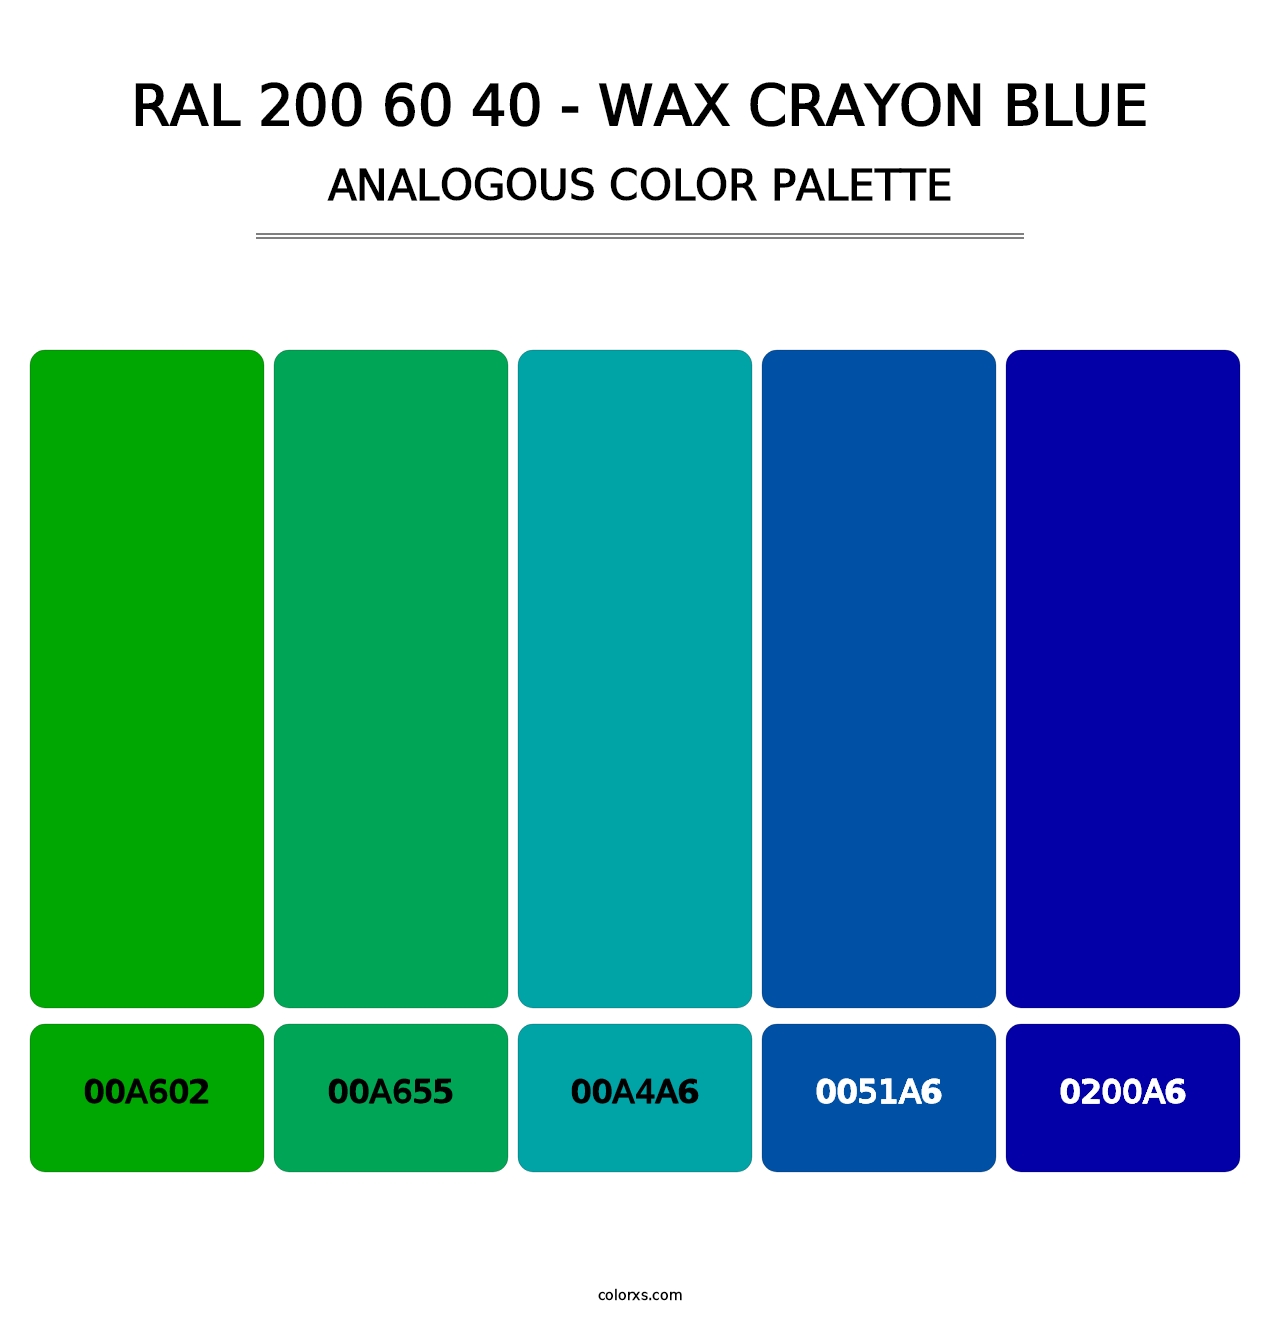 RAL 200 60 40 - Wax Crayon Blue - Analogous Color Palette